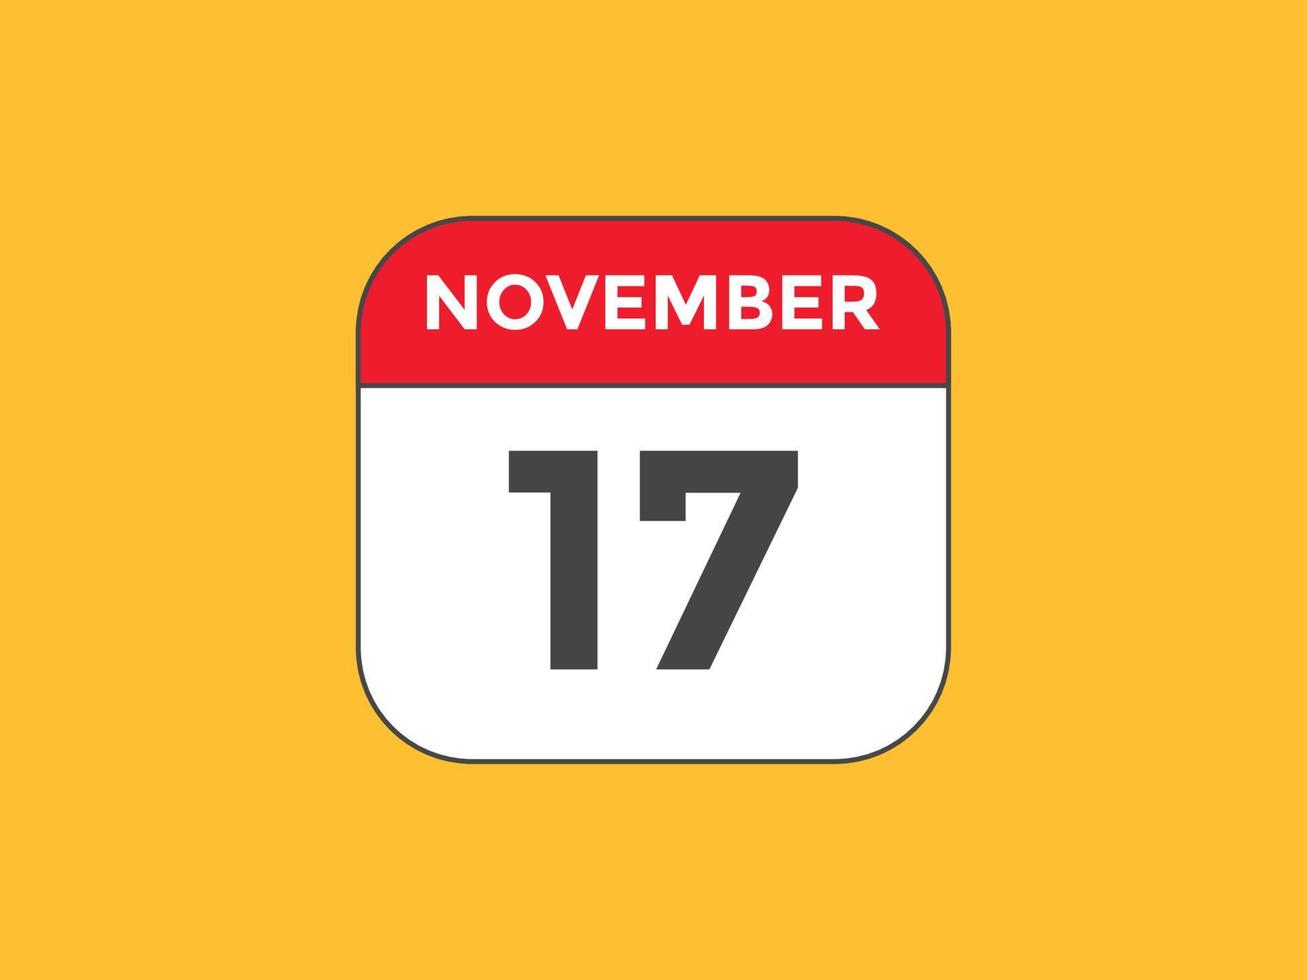 november 17 calendar reminder. 17th november daily calendar icon template. Calendar 17th november icon Design template. Vector illustration